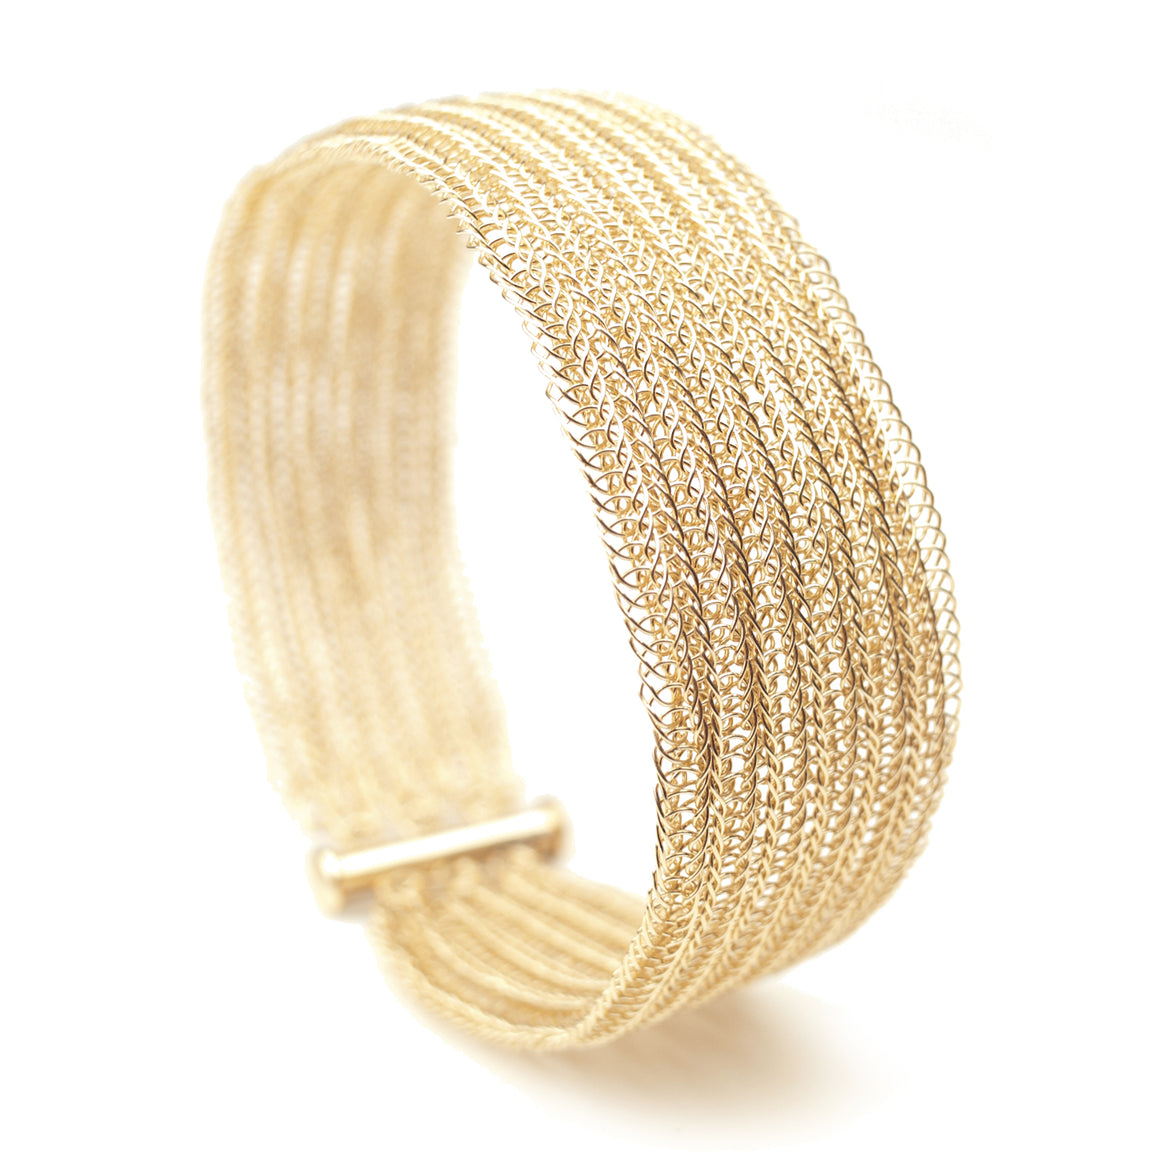 Double knit gold filled cuff bracelet - Yooladesign